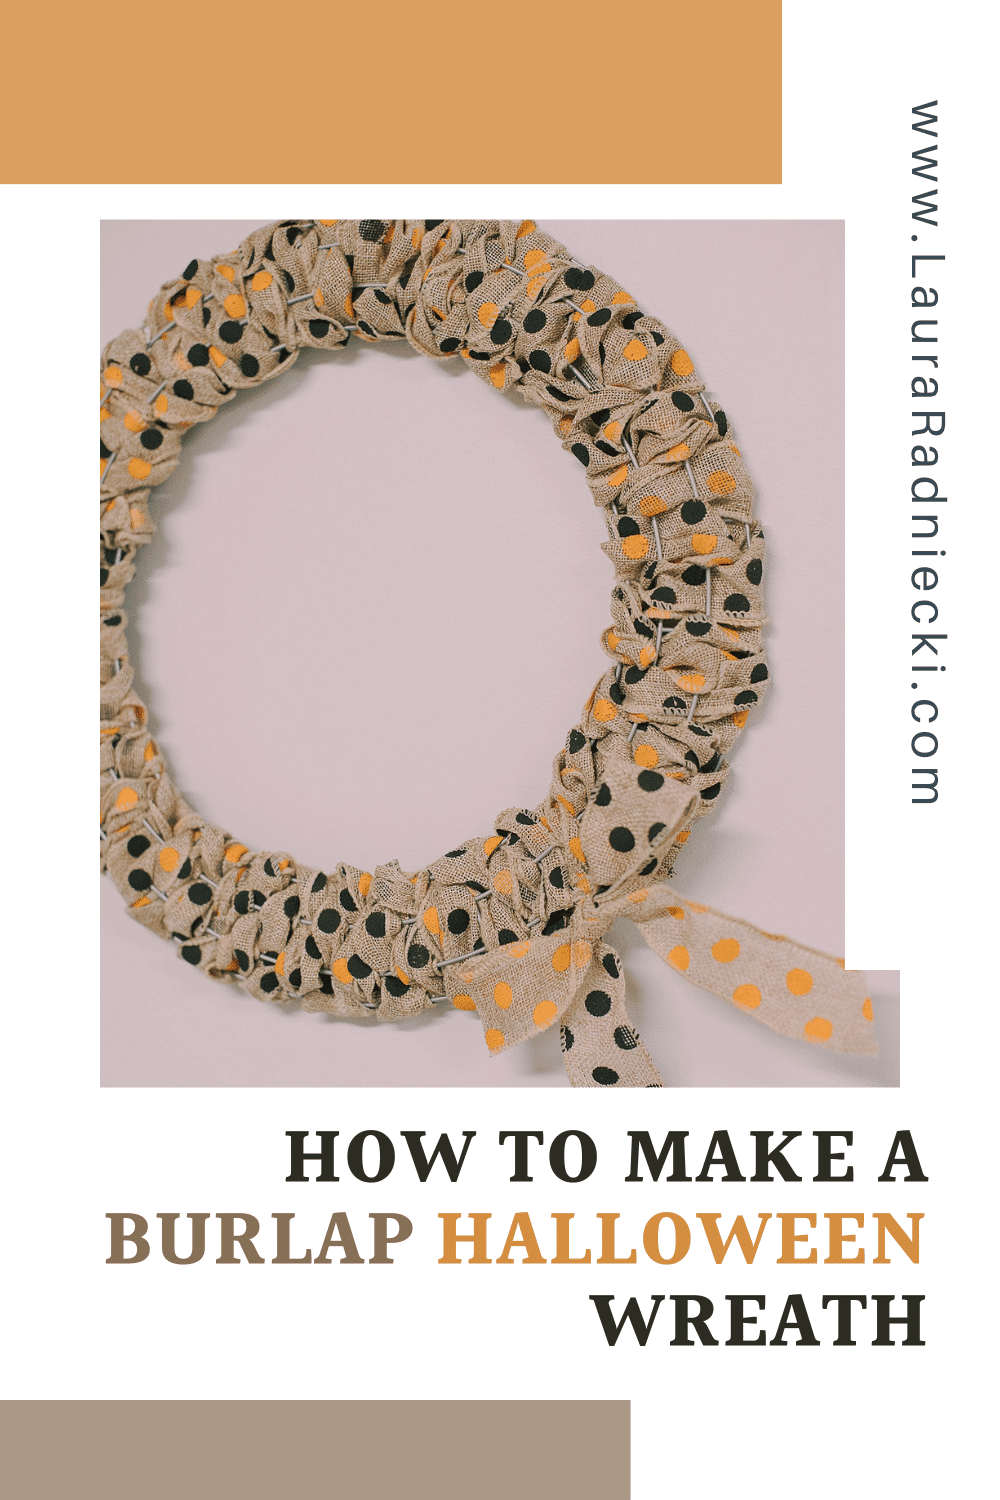 How to Make a Burlap Halloween Wreath